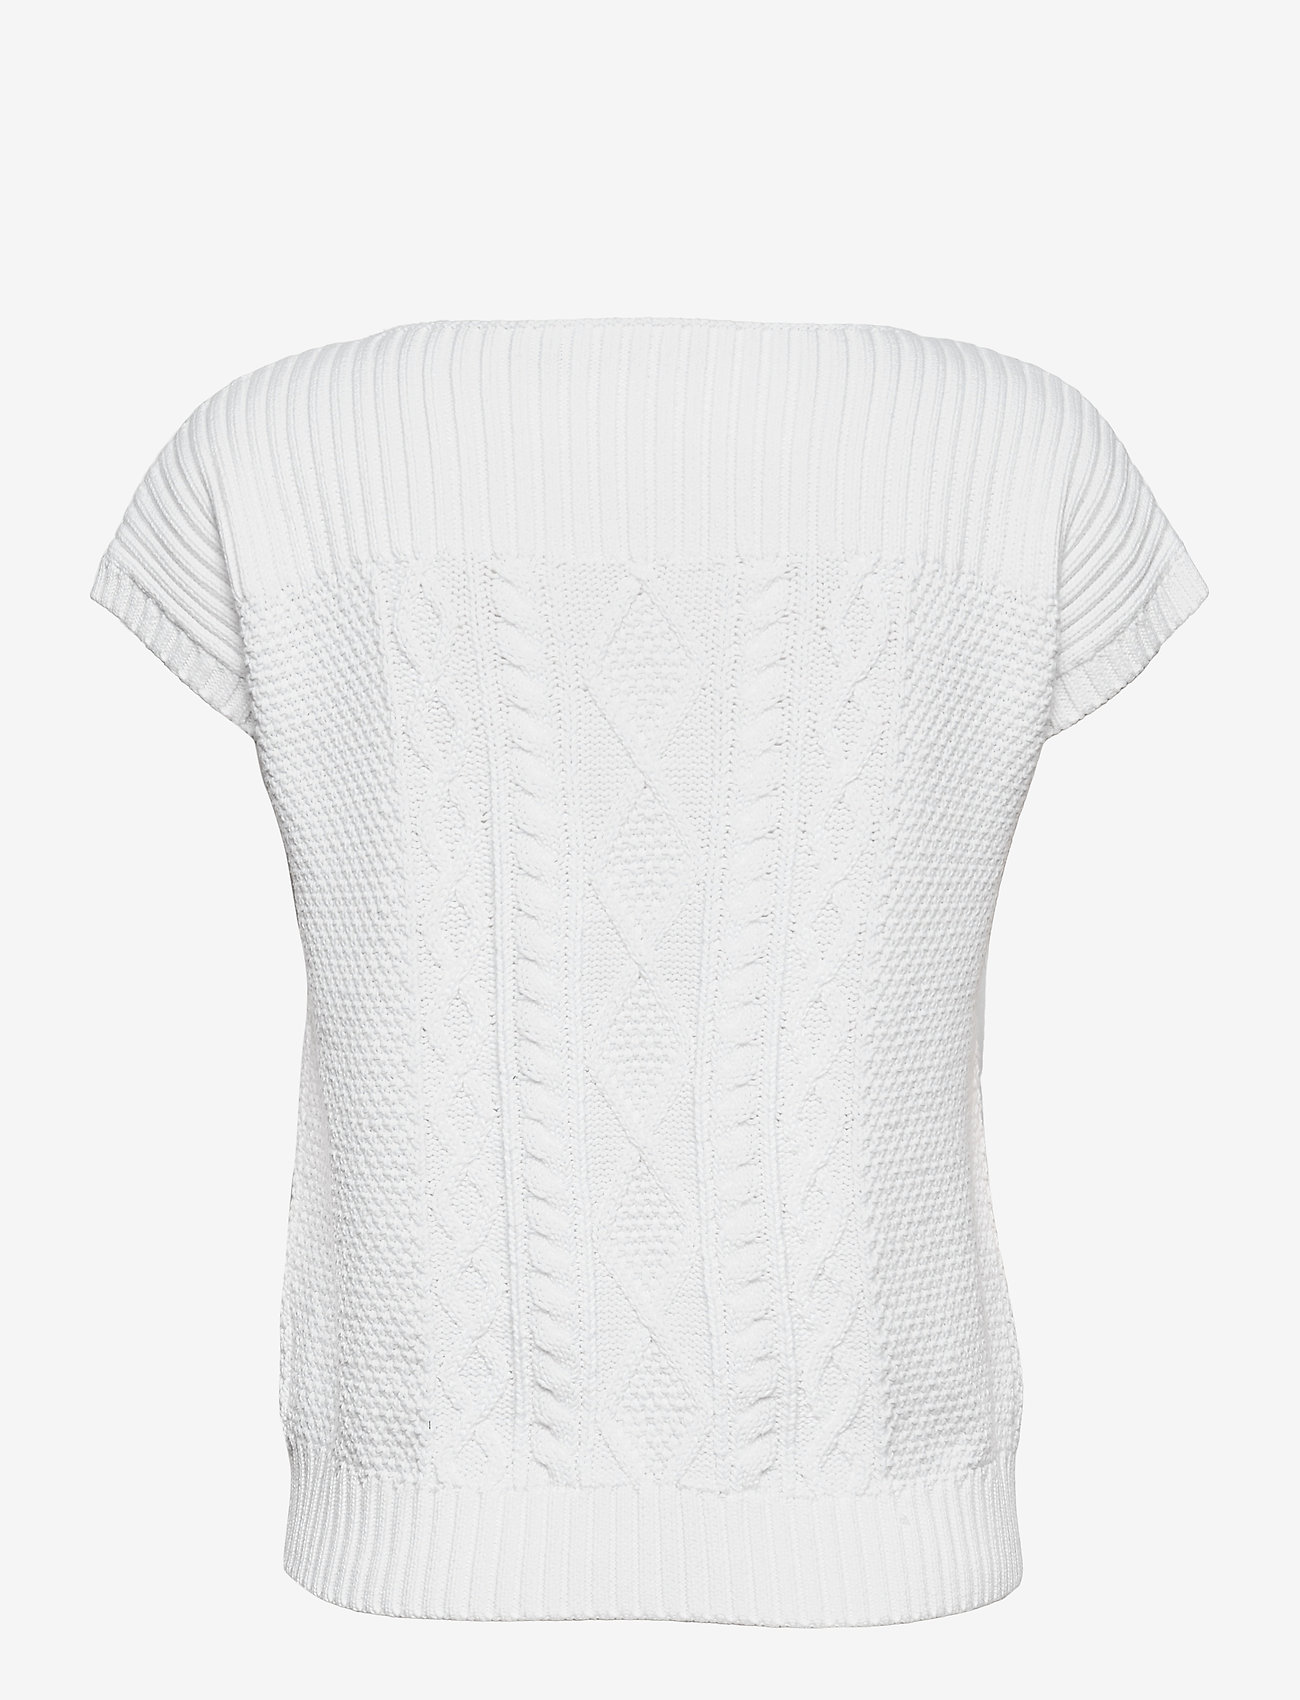 Lauren Ralph Lauren - Aran-Knit Combed Cotton Sweater - kortærmede bluser - white - 1